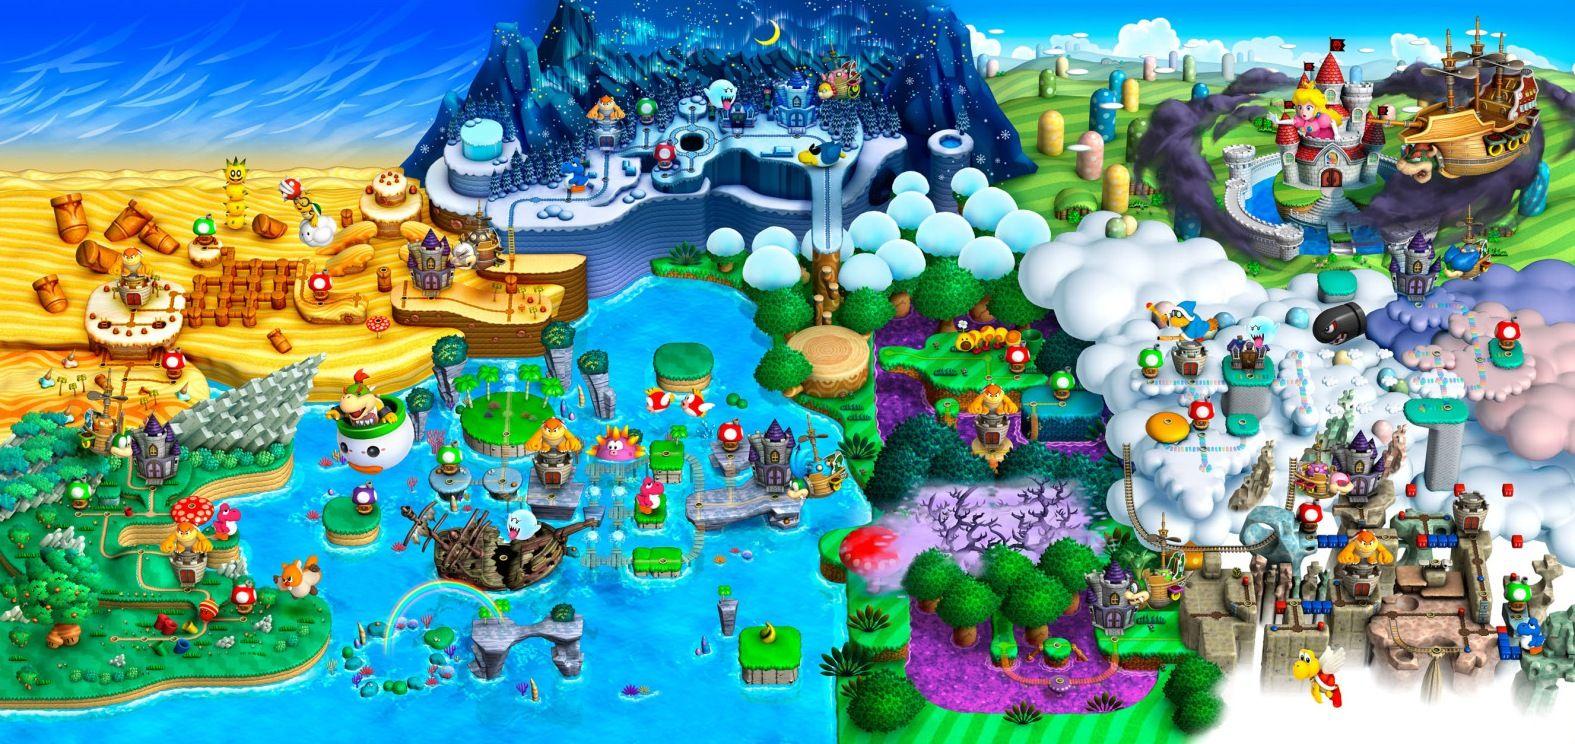 New Super Mario Bros. Wii Wallpapers - Top Free New Super Mario Bros